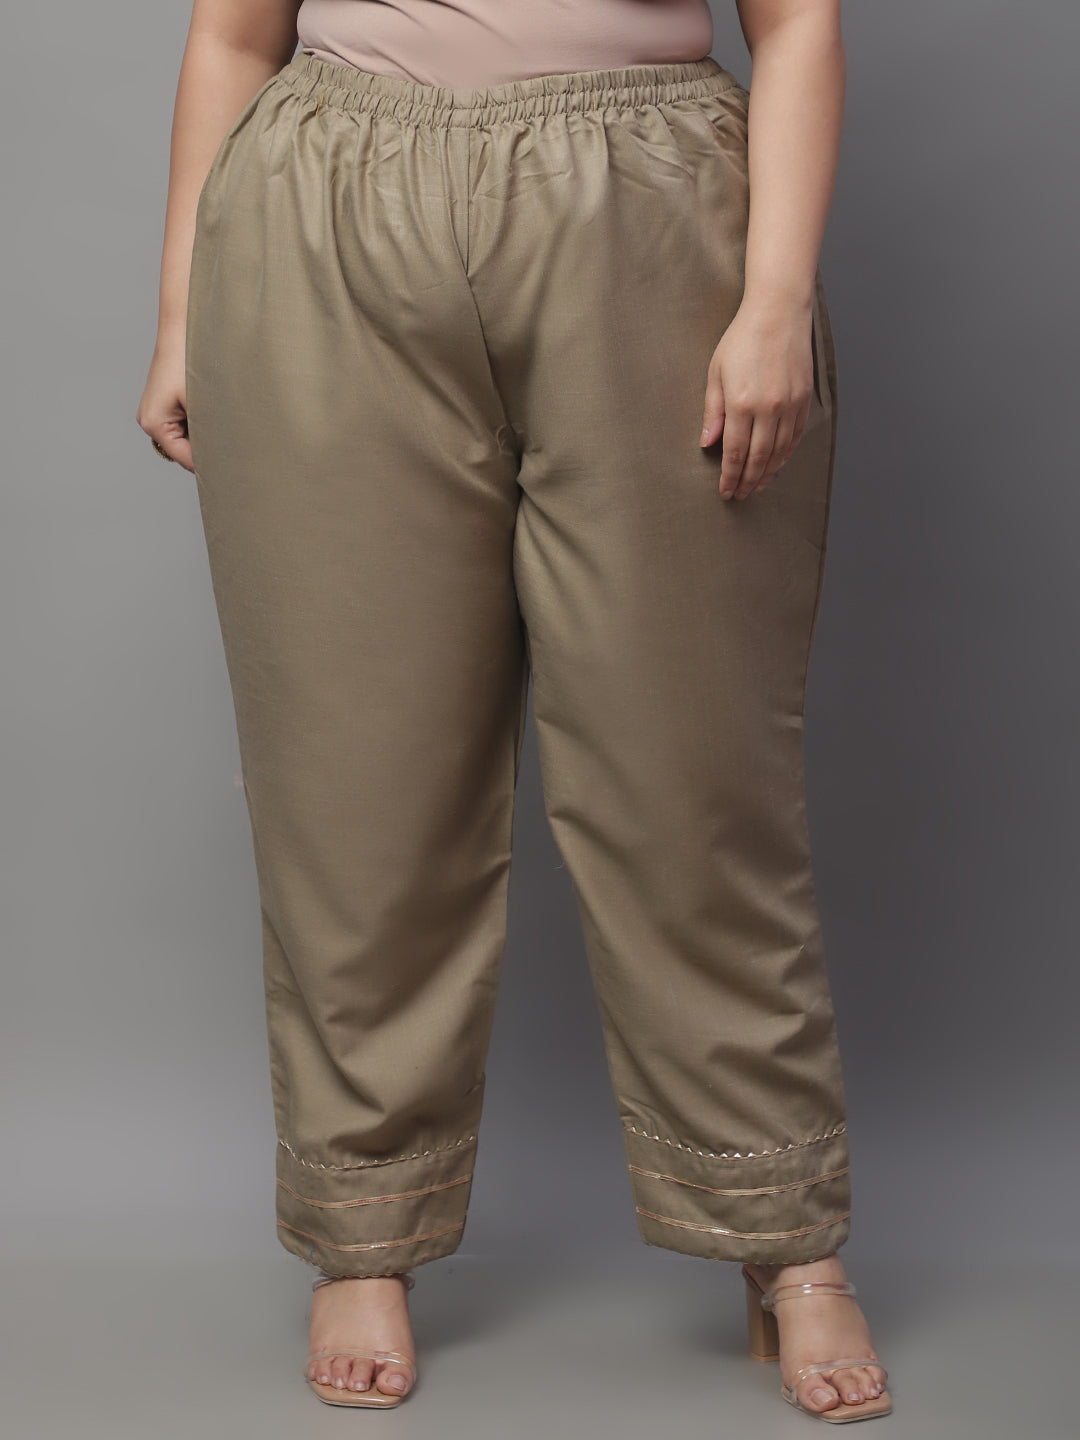 VredeVogel Women Plus Size Kurta and Trousers Pant Set Pure Silk Blend